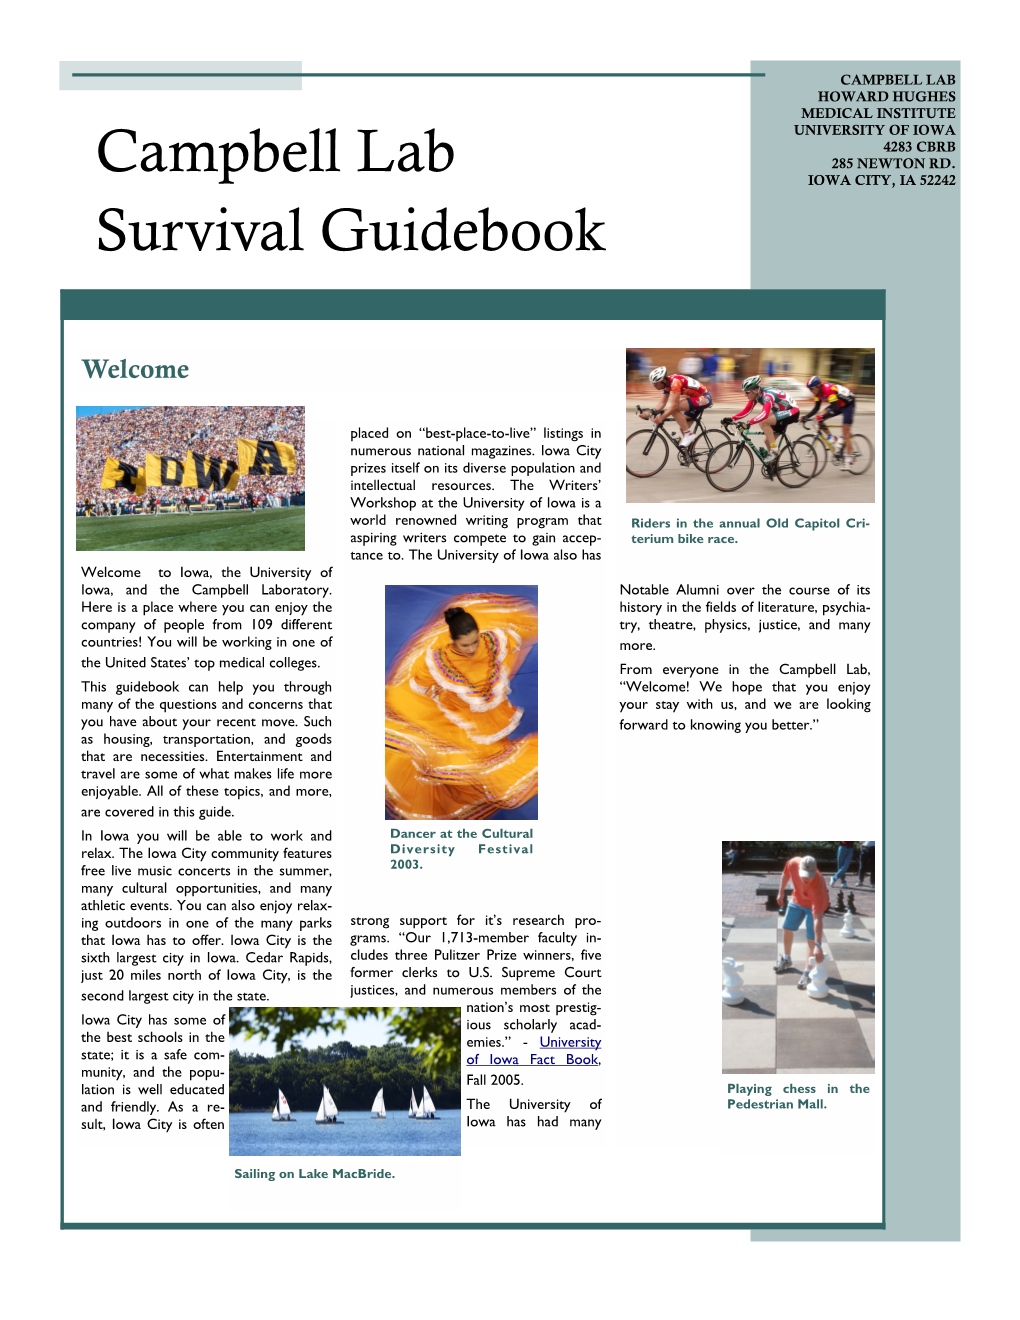 Campbell Lab Survival Guidebook